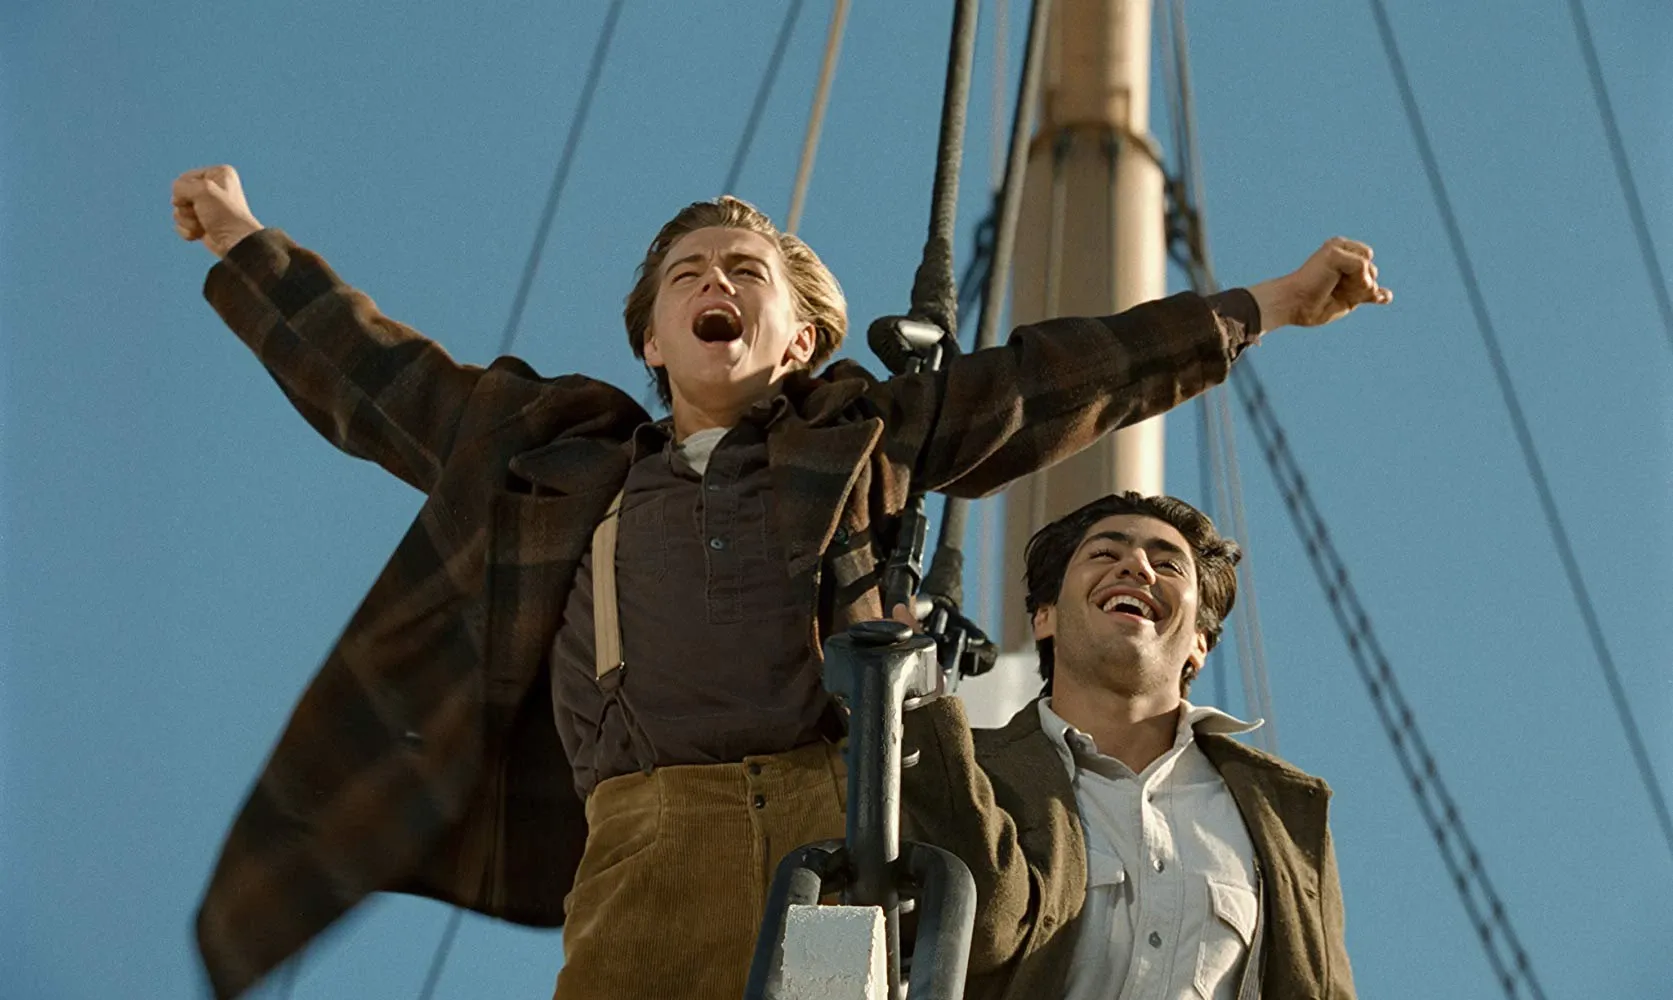 Leonardo DiCaprio in Titanic as Jack Dawson